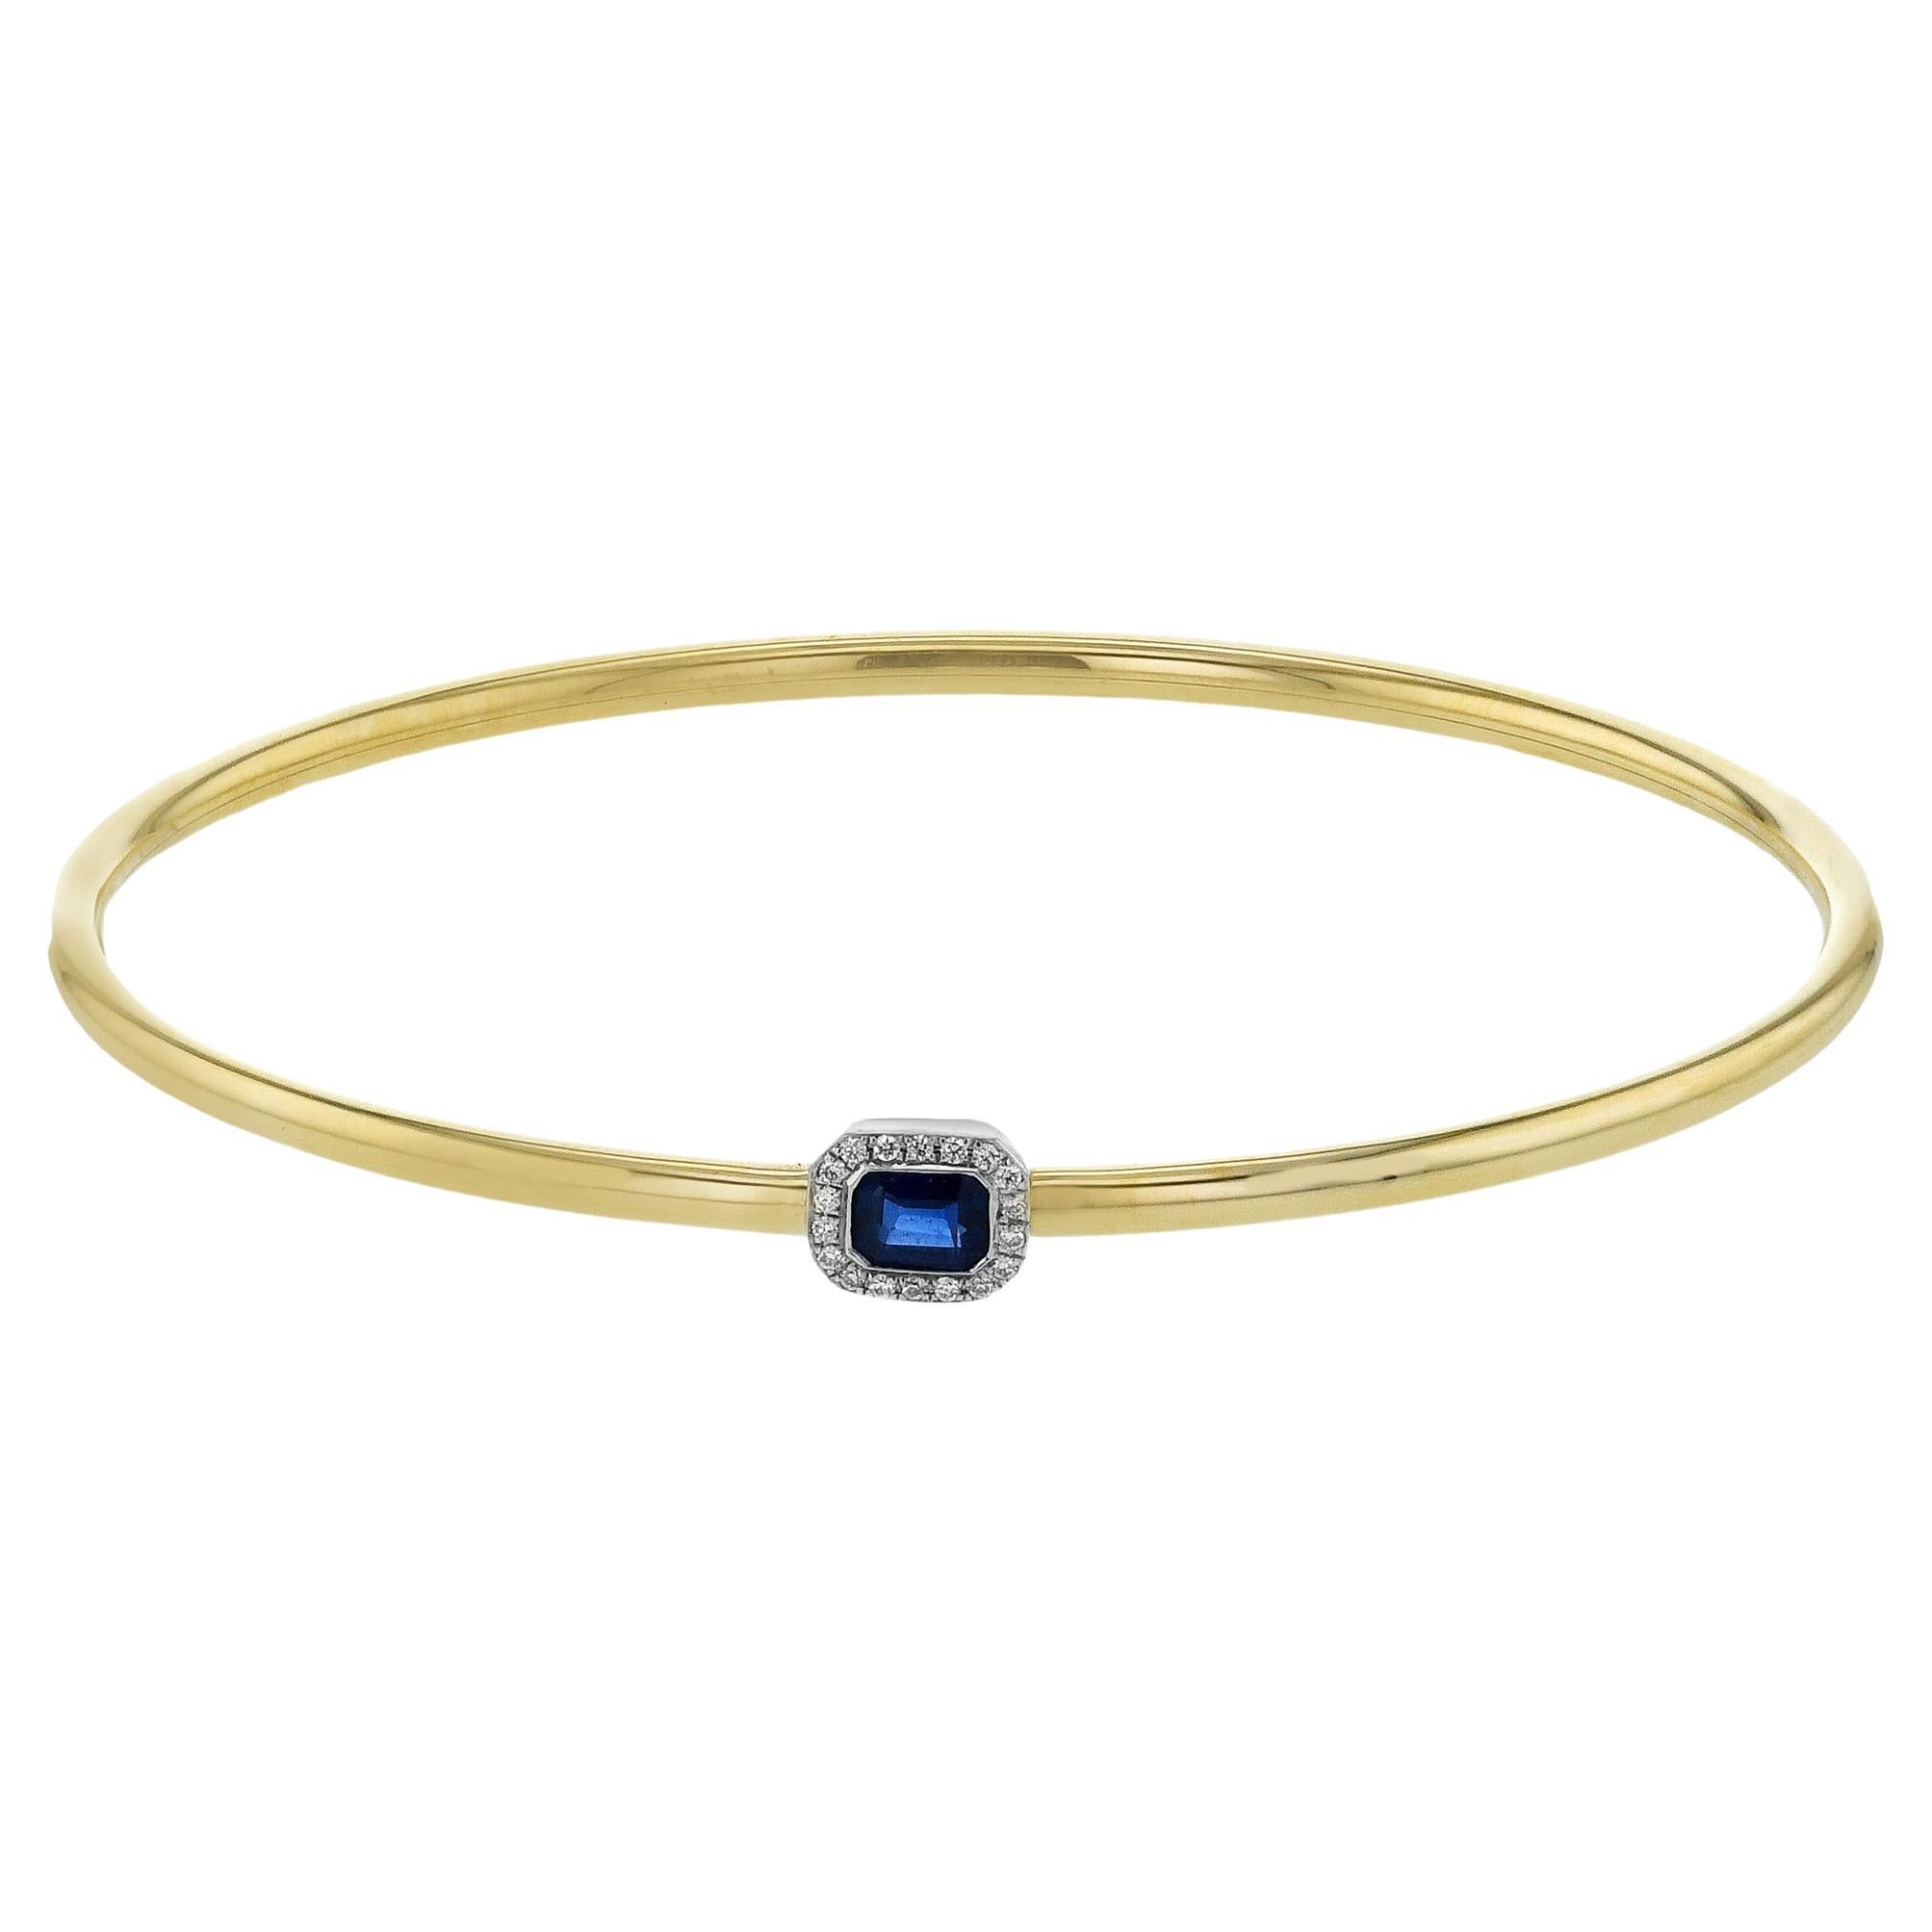 Simon G. 18K Gold Bangle Bracelet with Diamonds and Sapphire - LB2494 For Sale